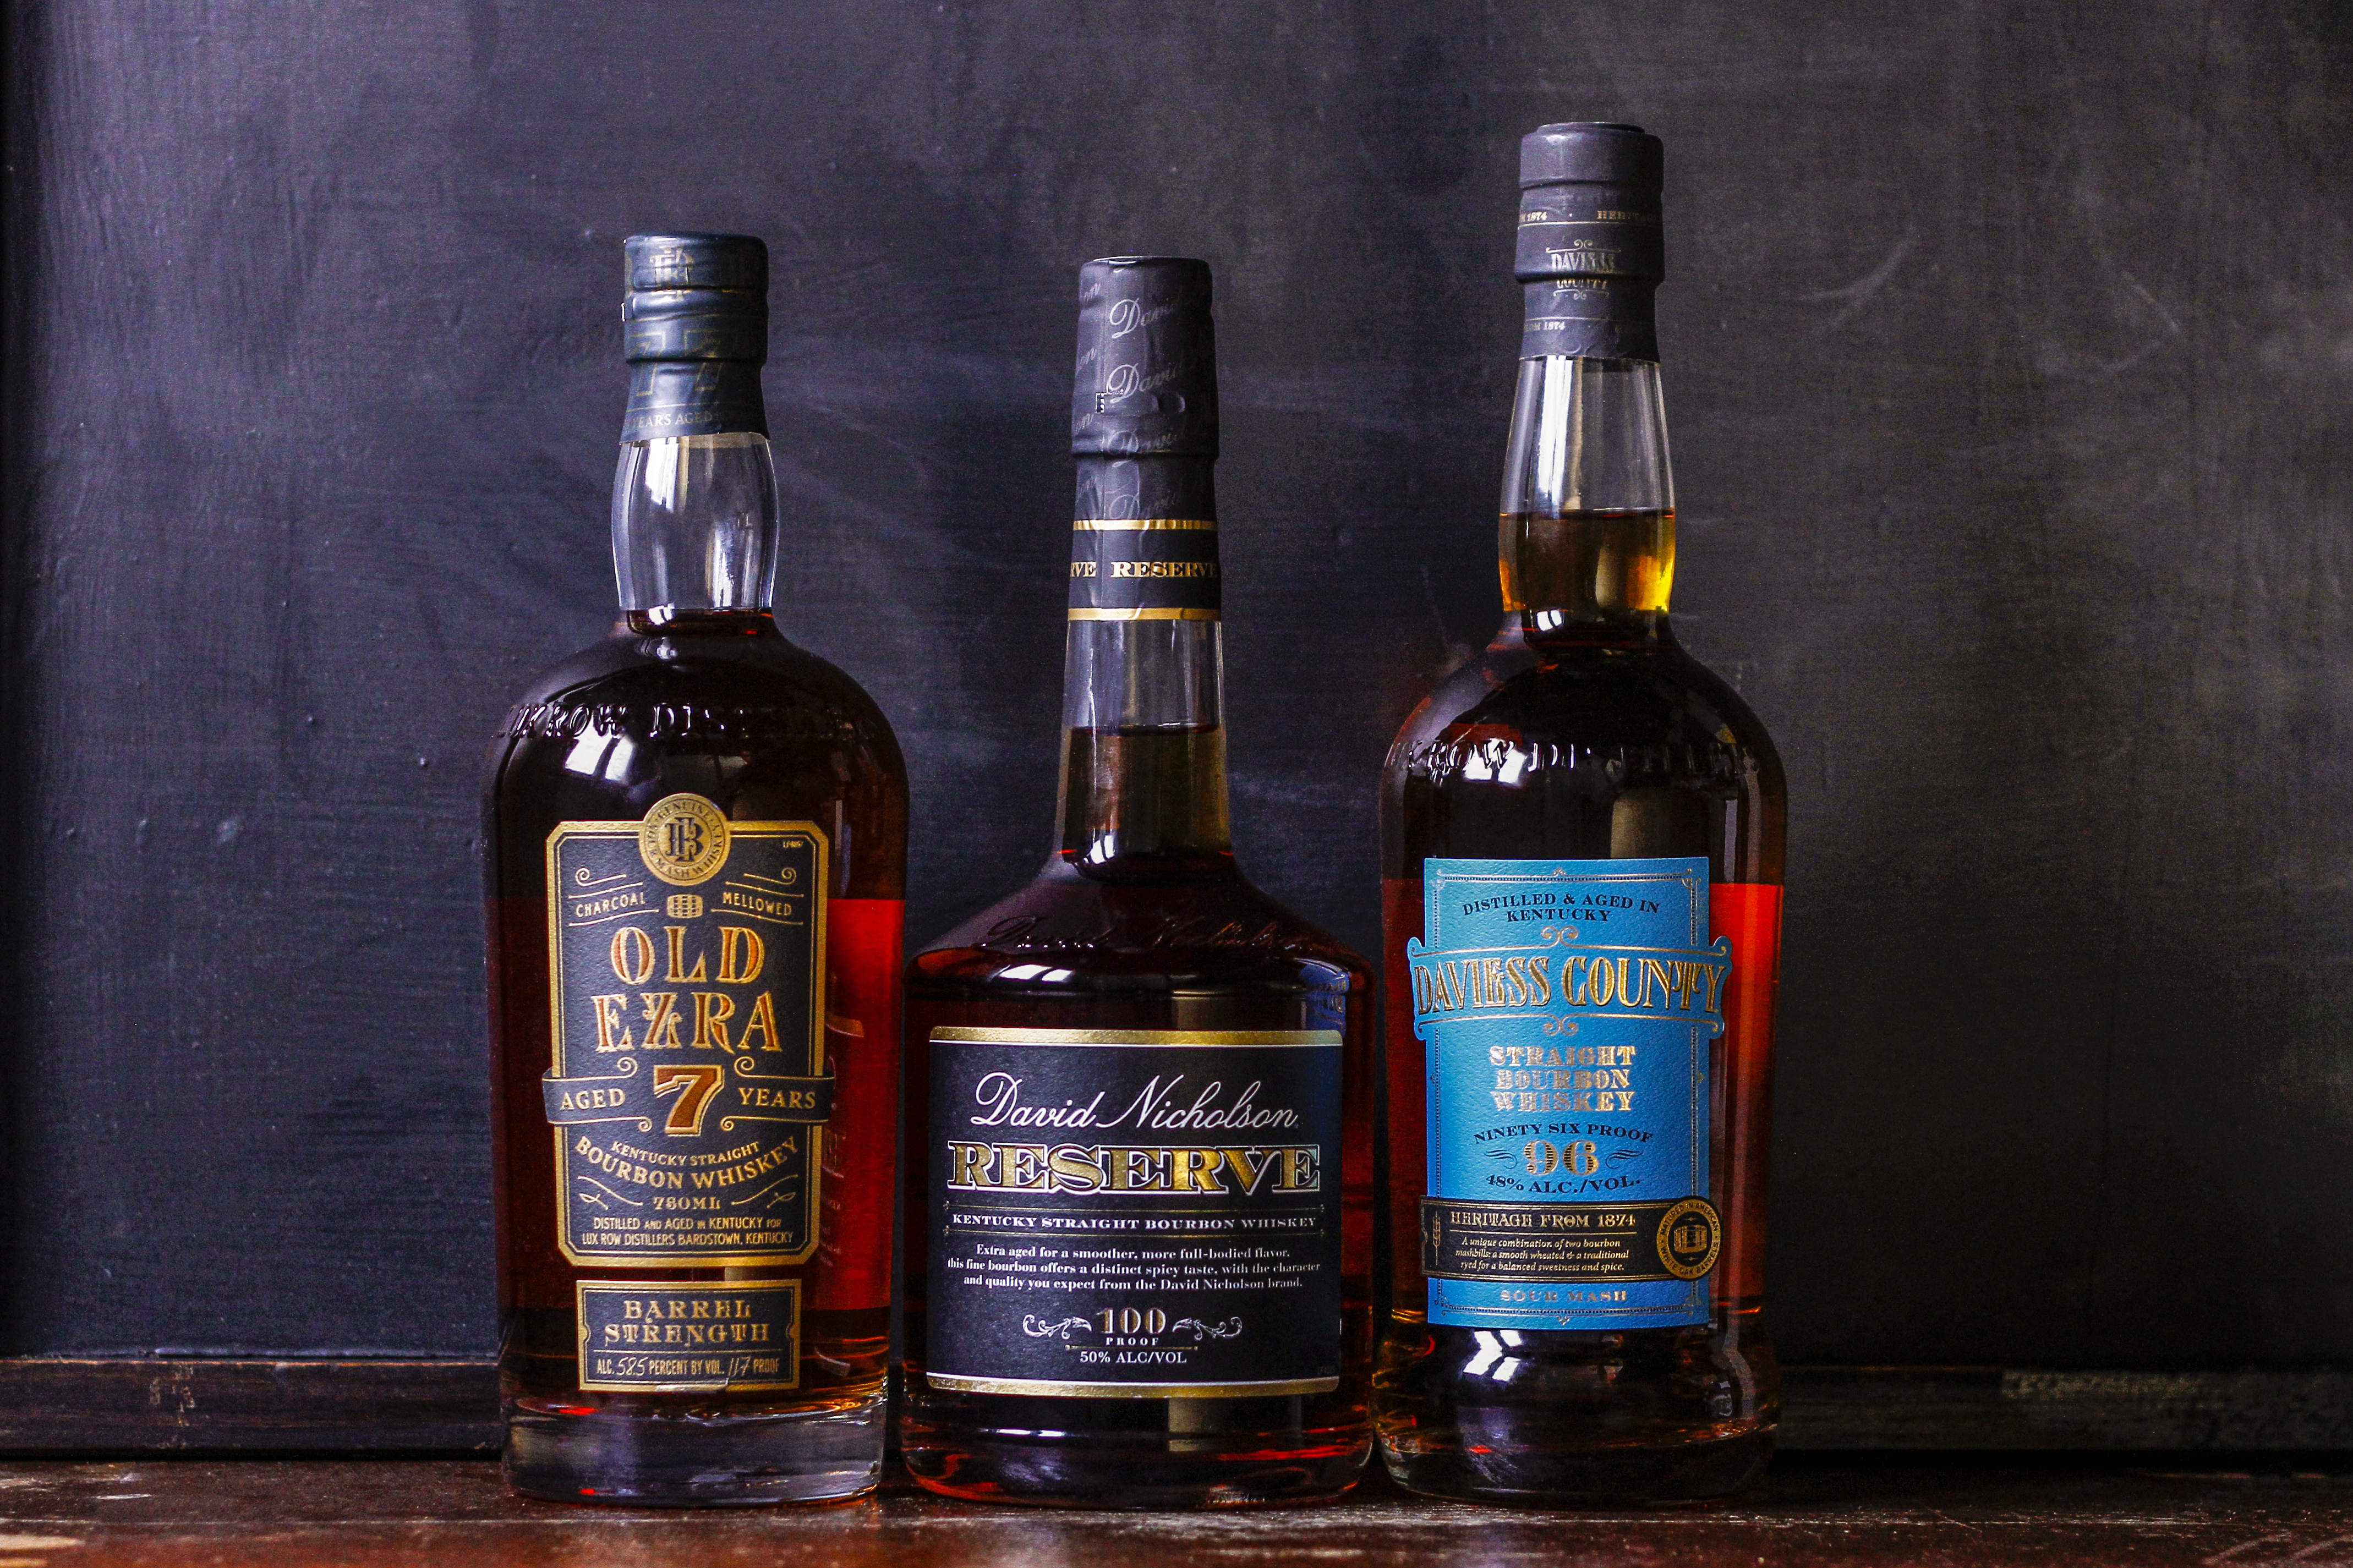 David Nicholson, Ezra Brooks, and Daviess County bourbons